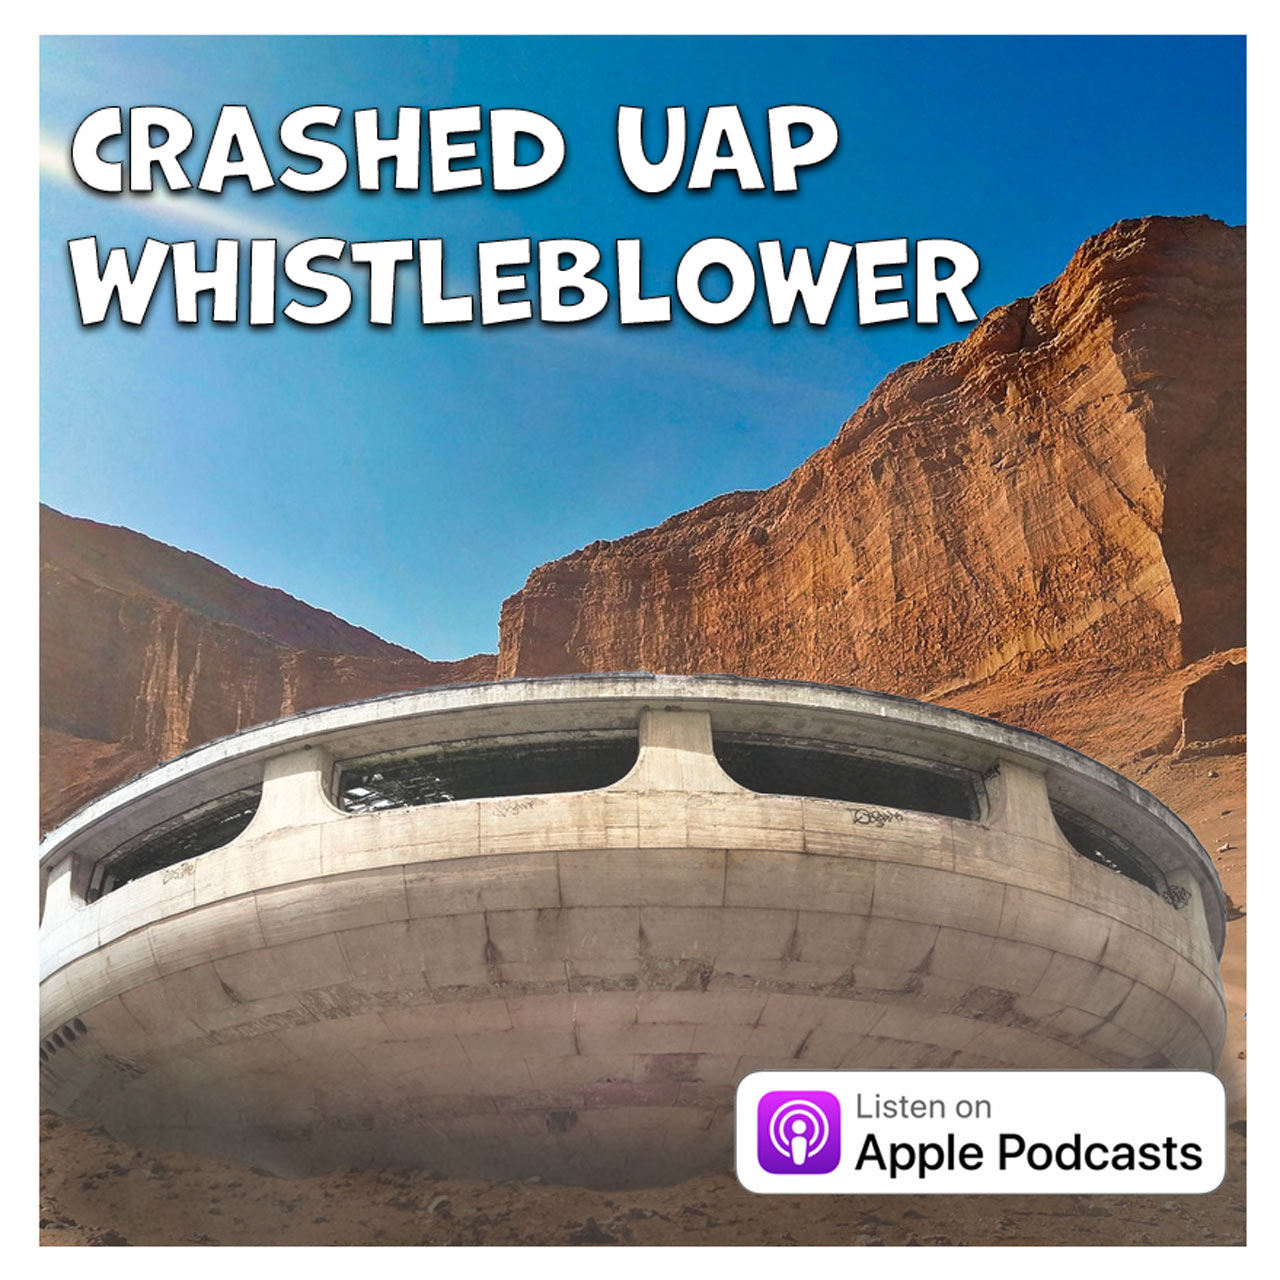 UAP Whistleblower